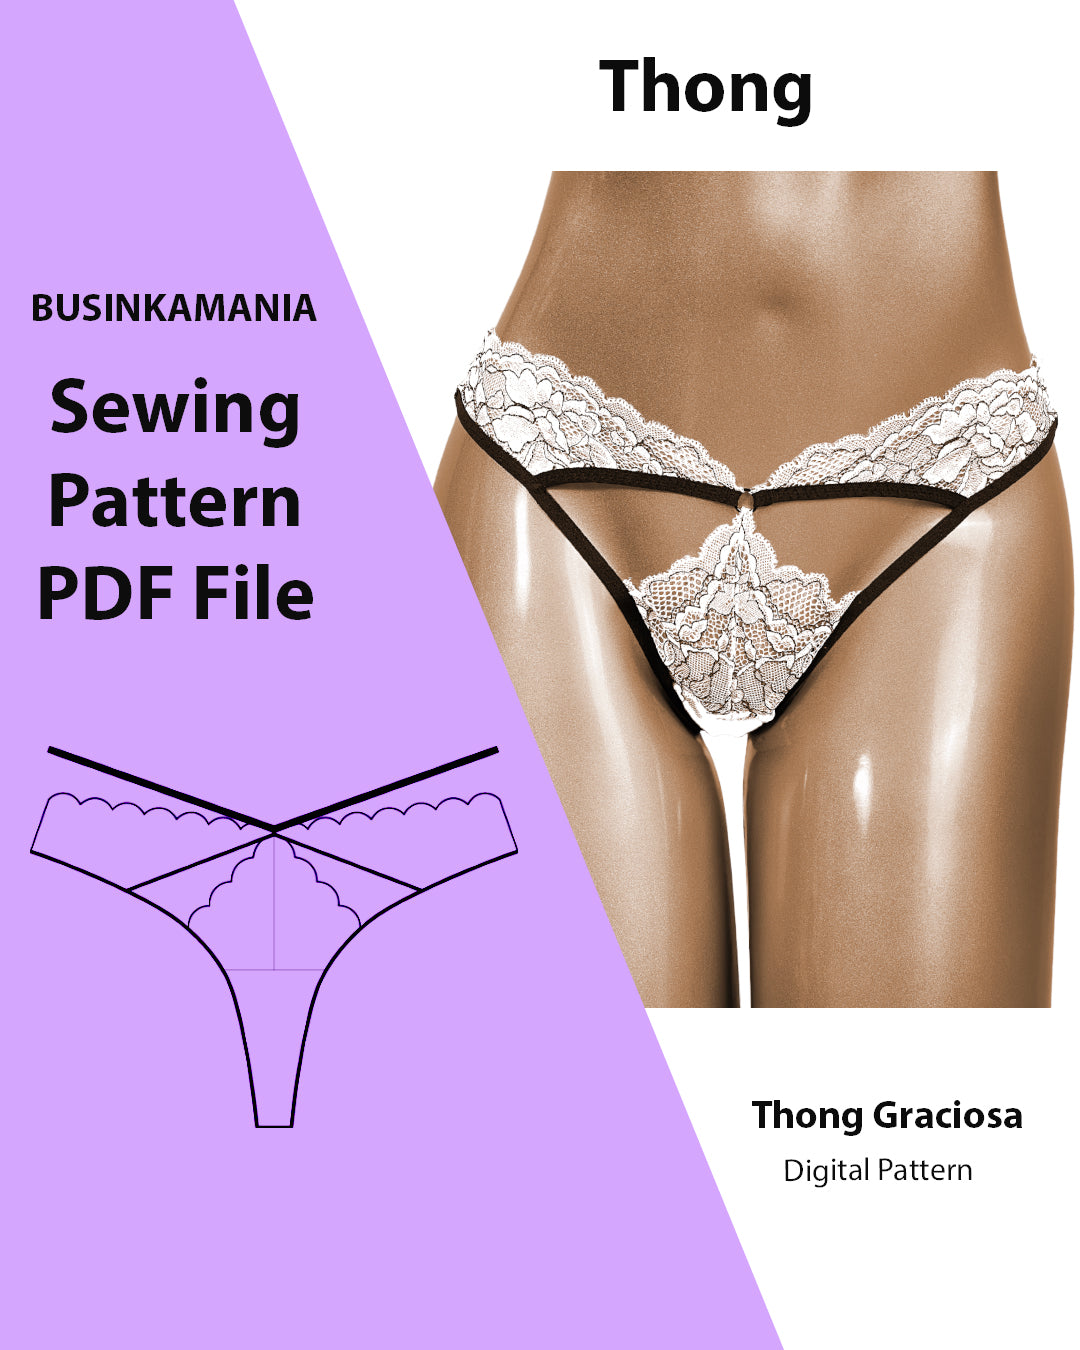 Thong Graciosa Sewing Pattern